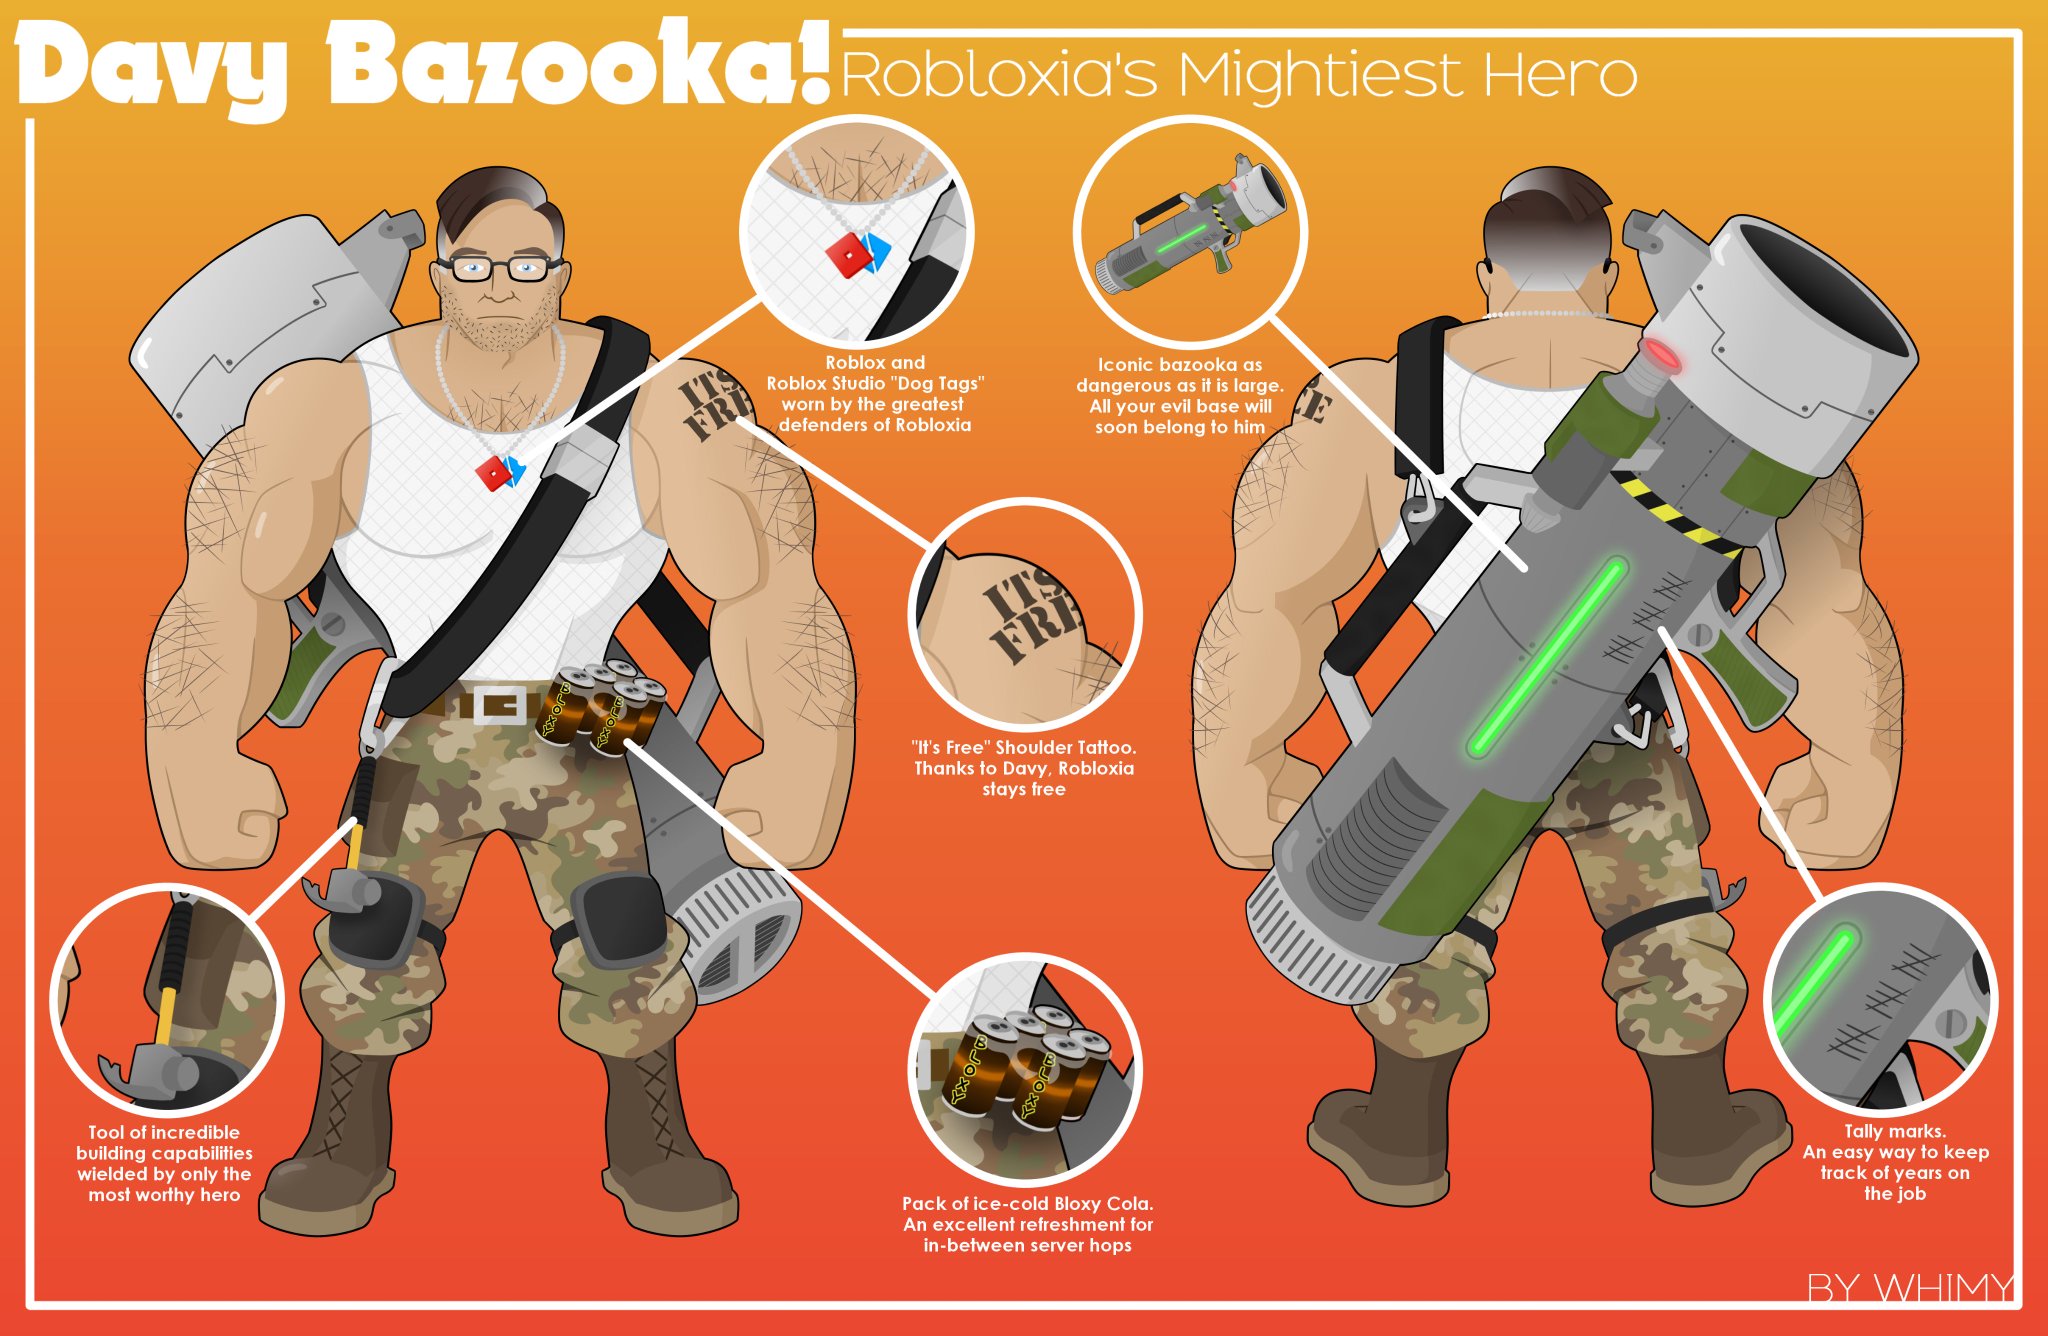 Roblox - Meet Davy Bazooka: the powered-by-imagination powerhouse